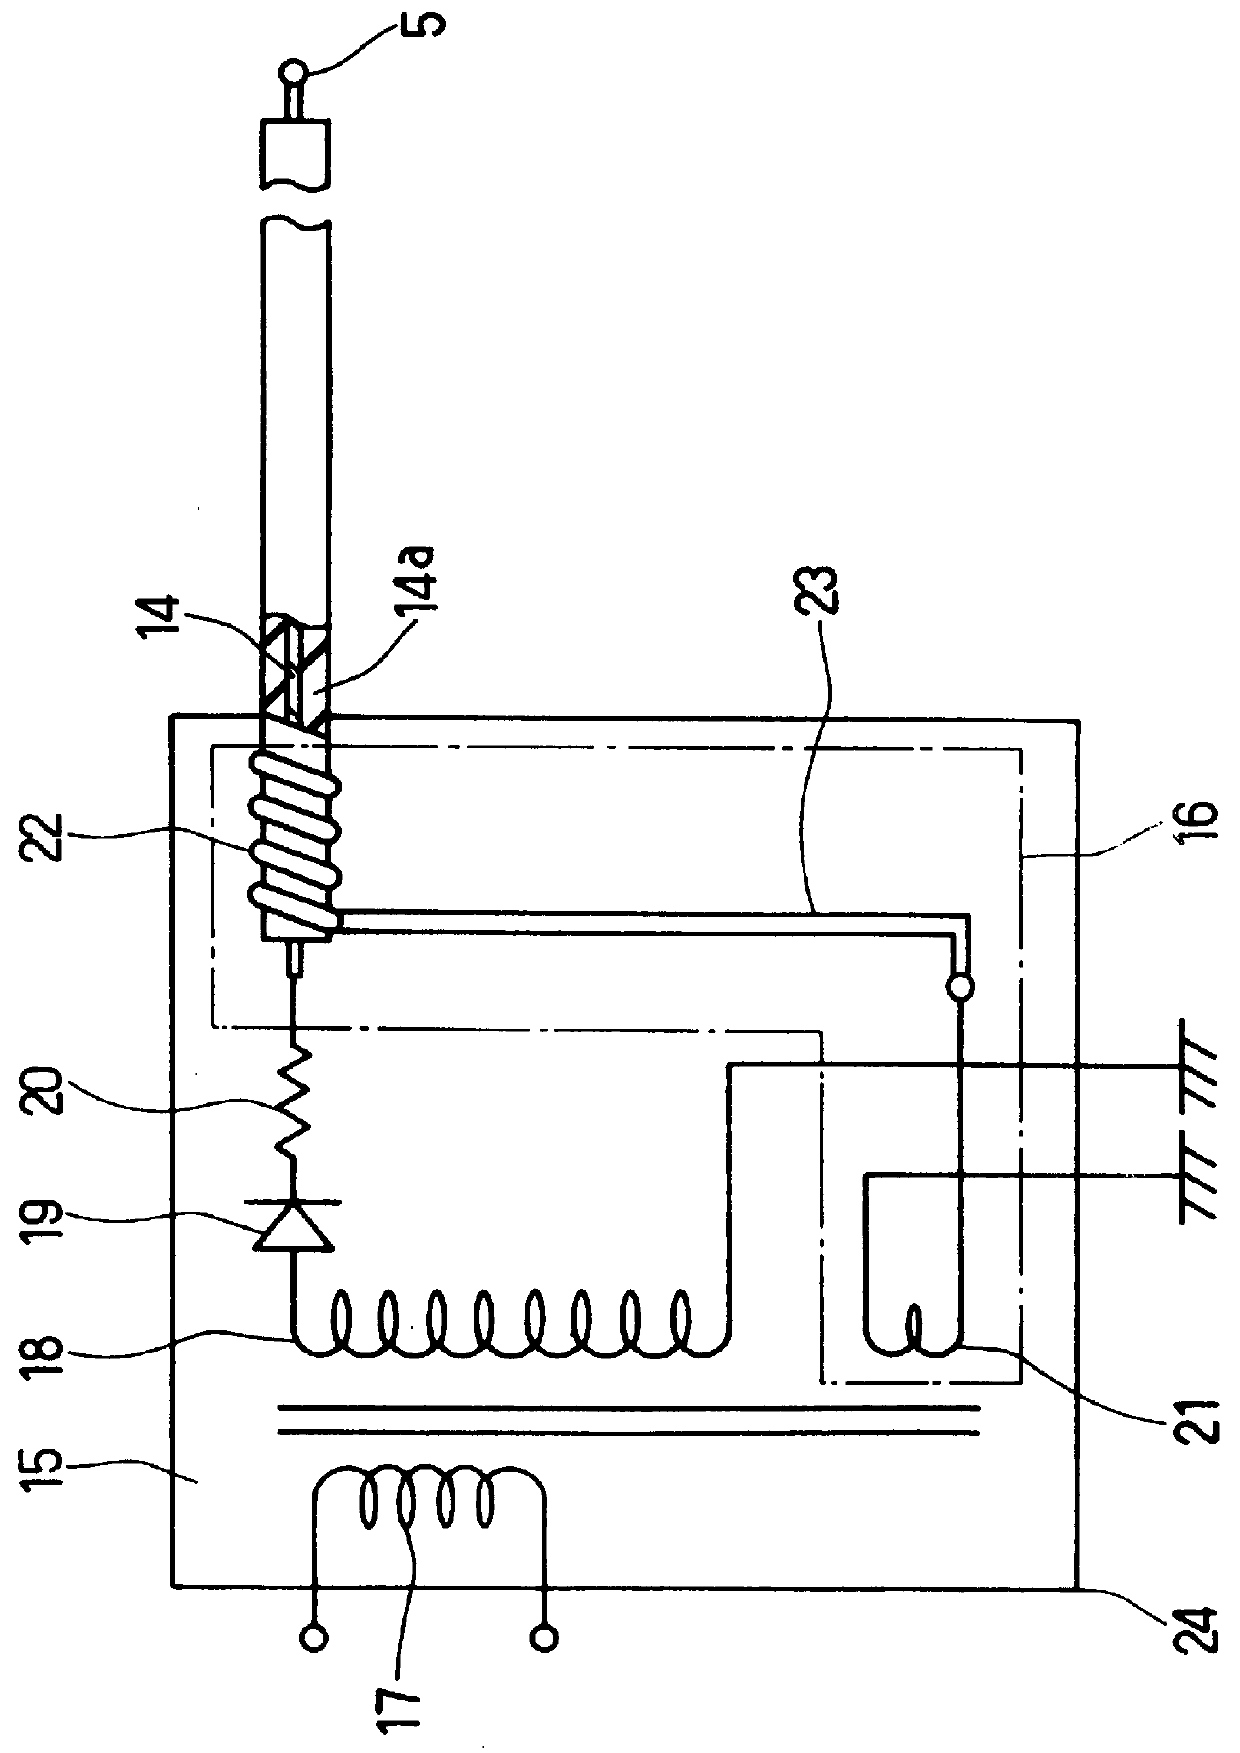 Cathode ray tube apparatus